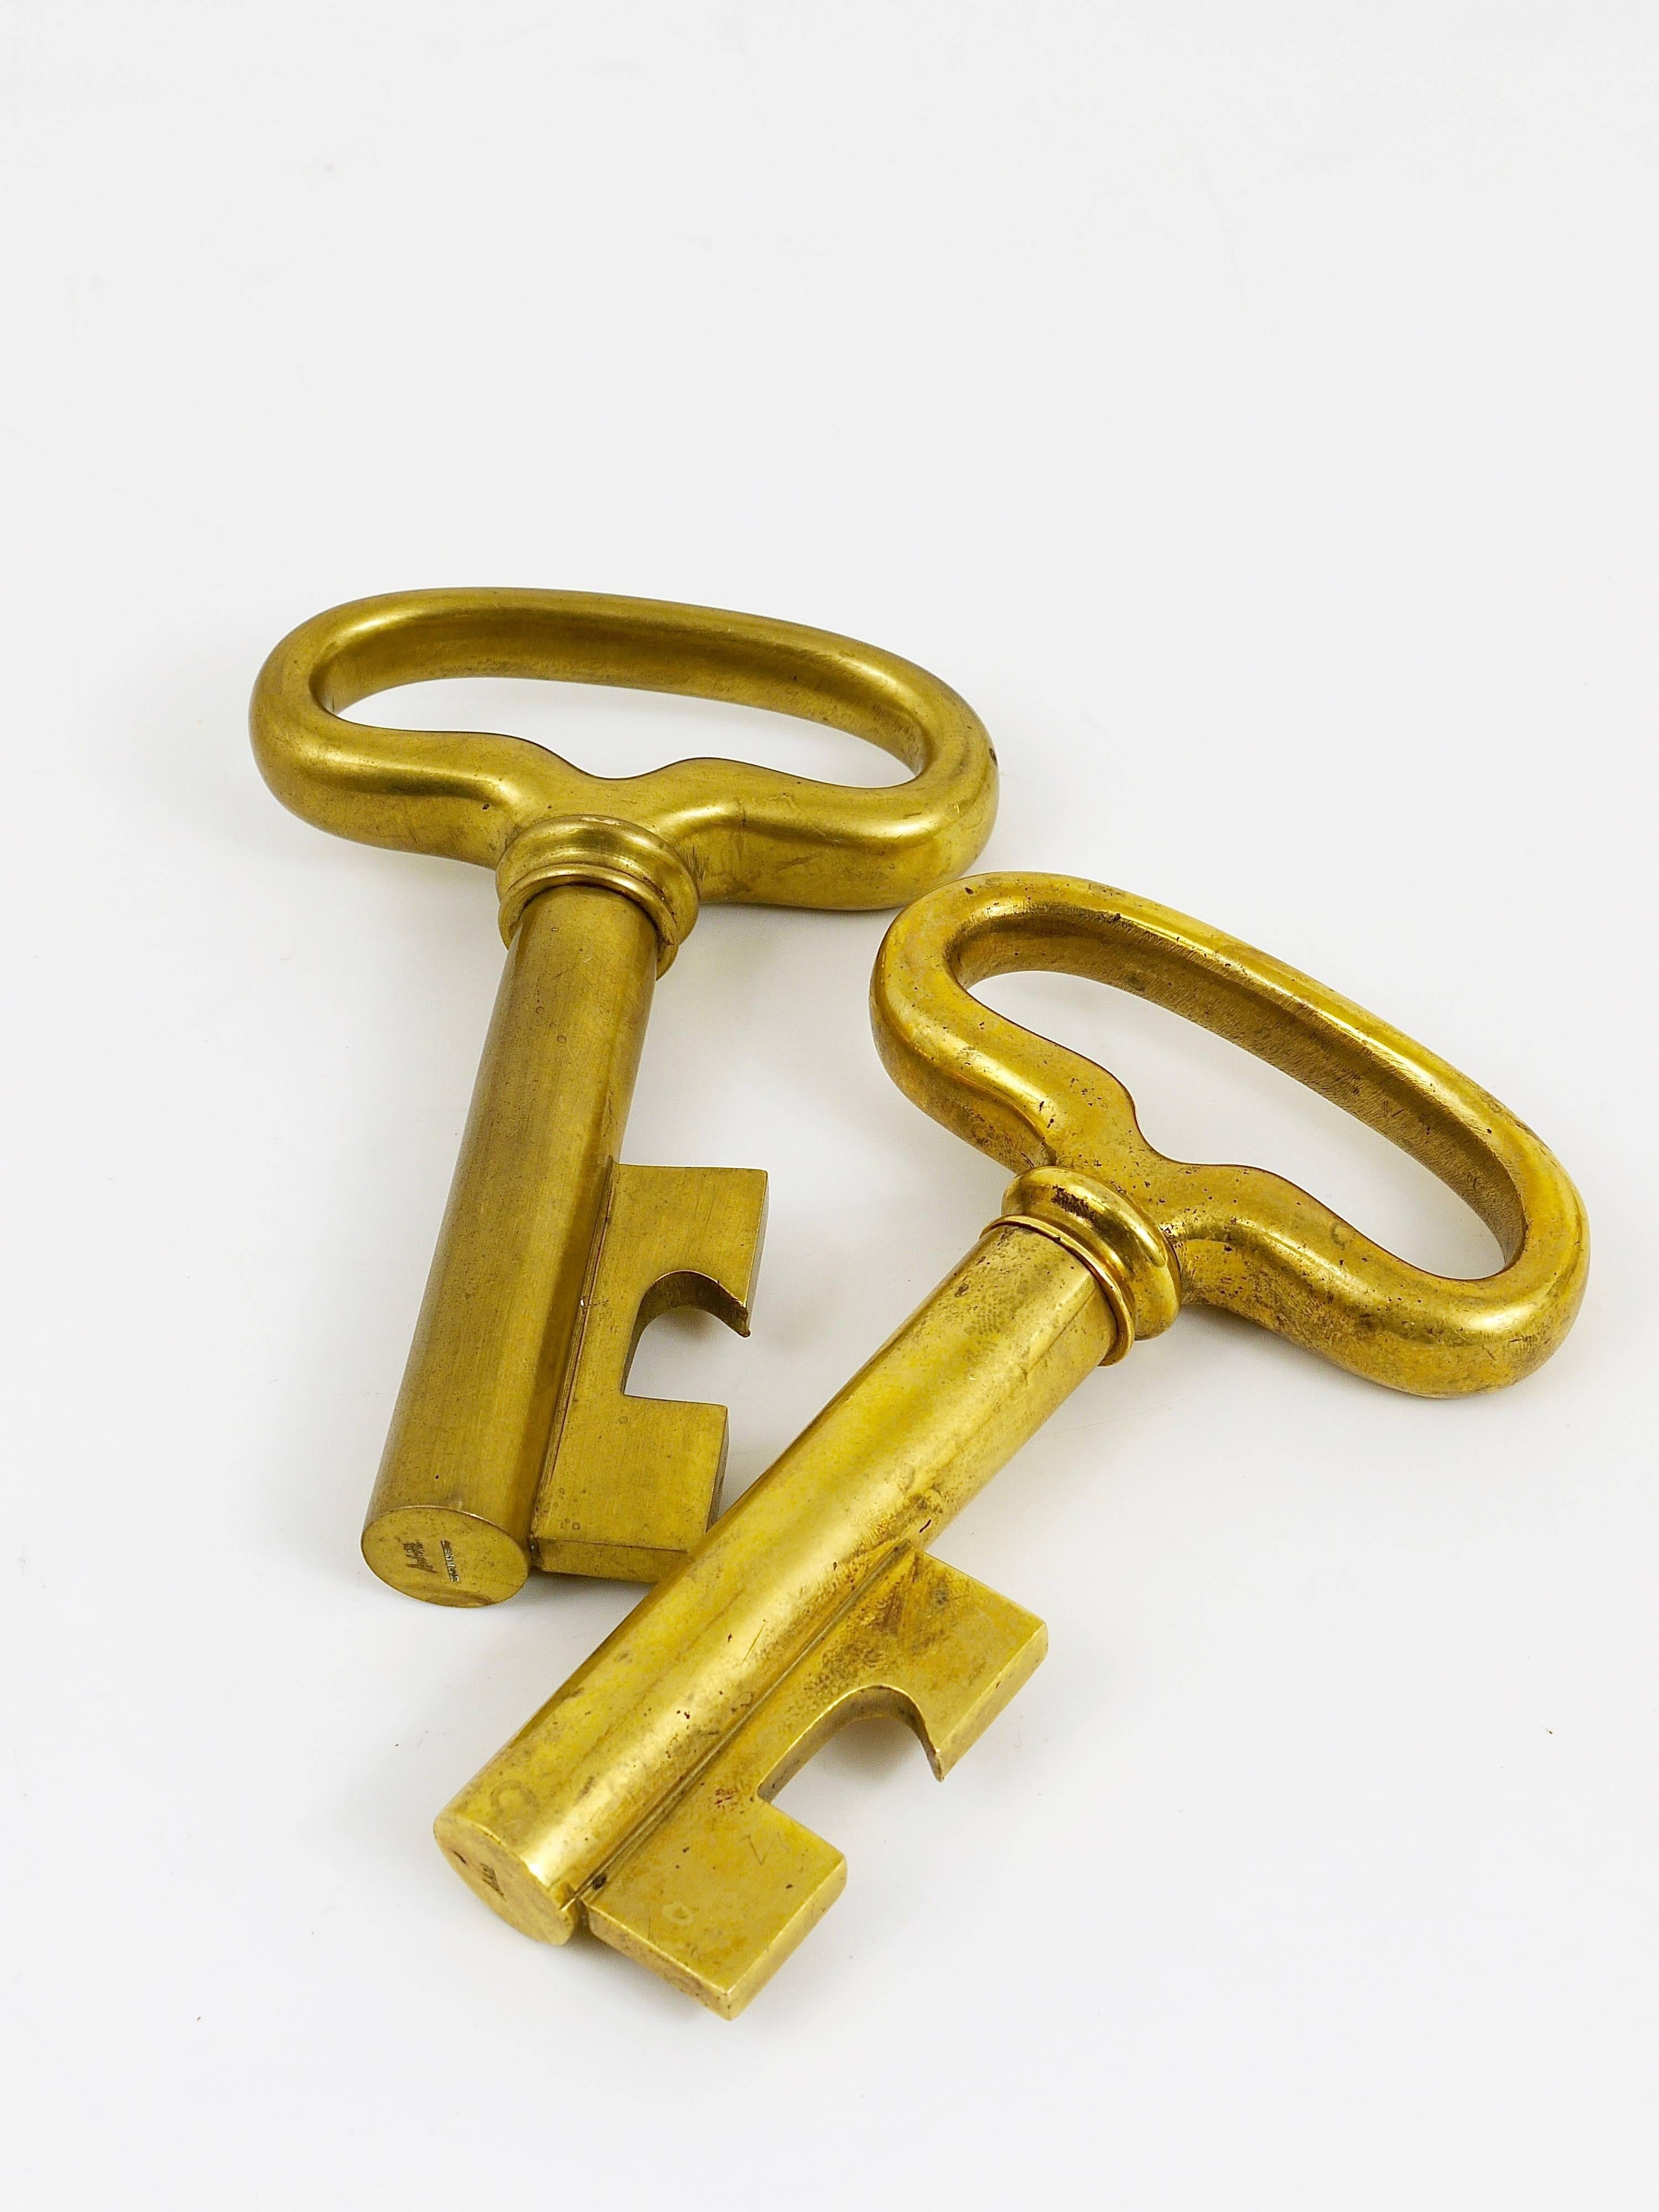 Mid-Century Modern Big Carl Auböck Extra Large Brass Key Cork Screw, Bottle Opener, Austria, 1950s